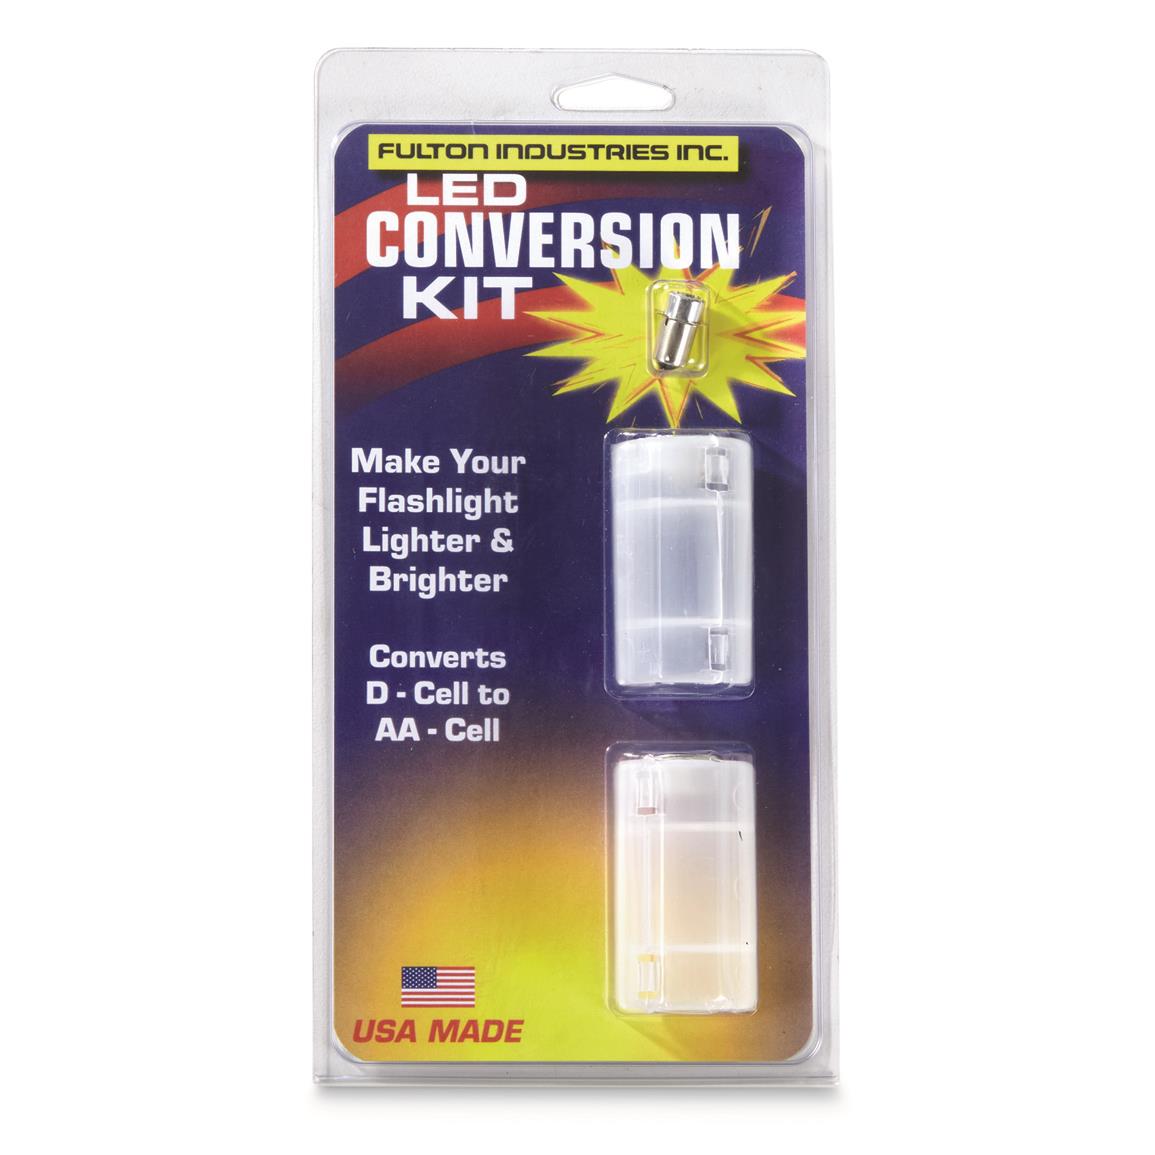 U.S. Municipal Surplus Flashlight LED Conversion Kit, New